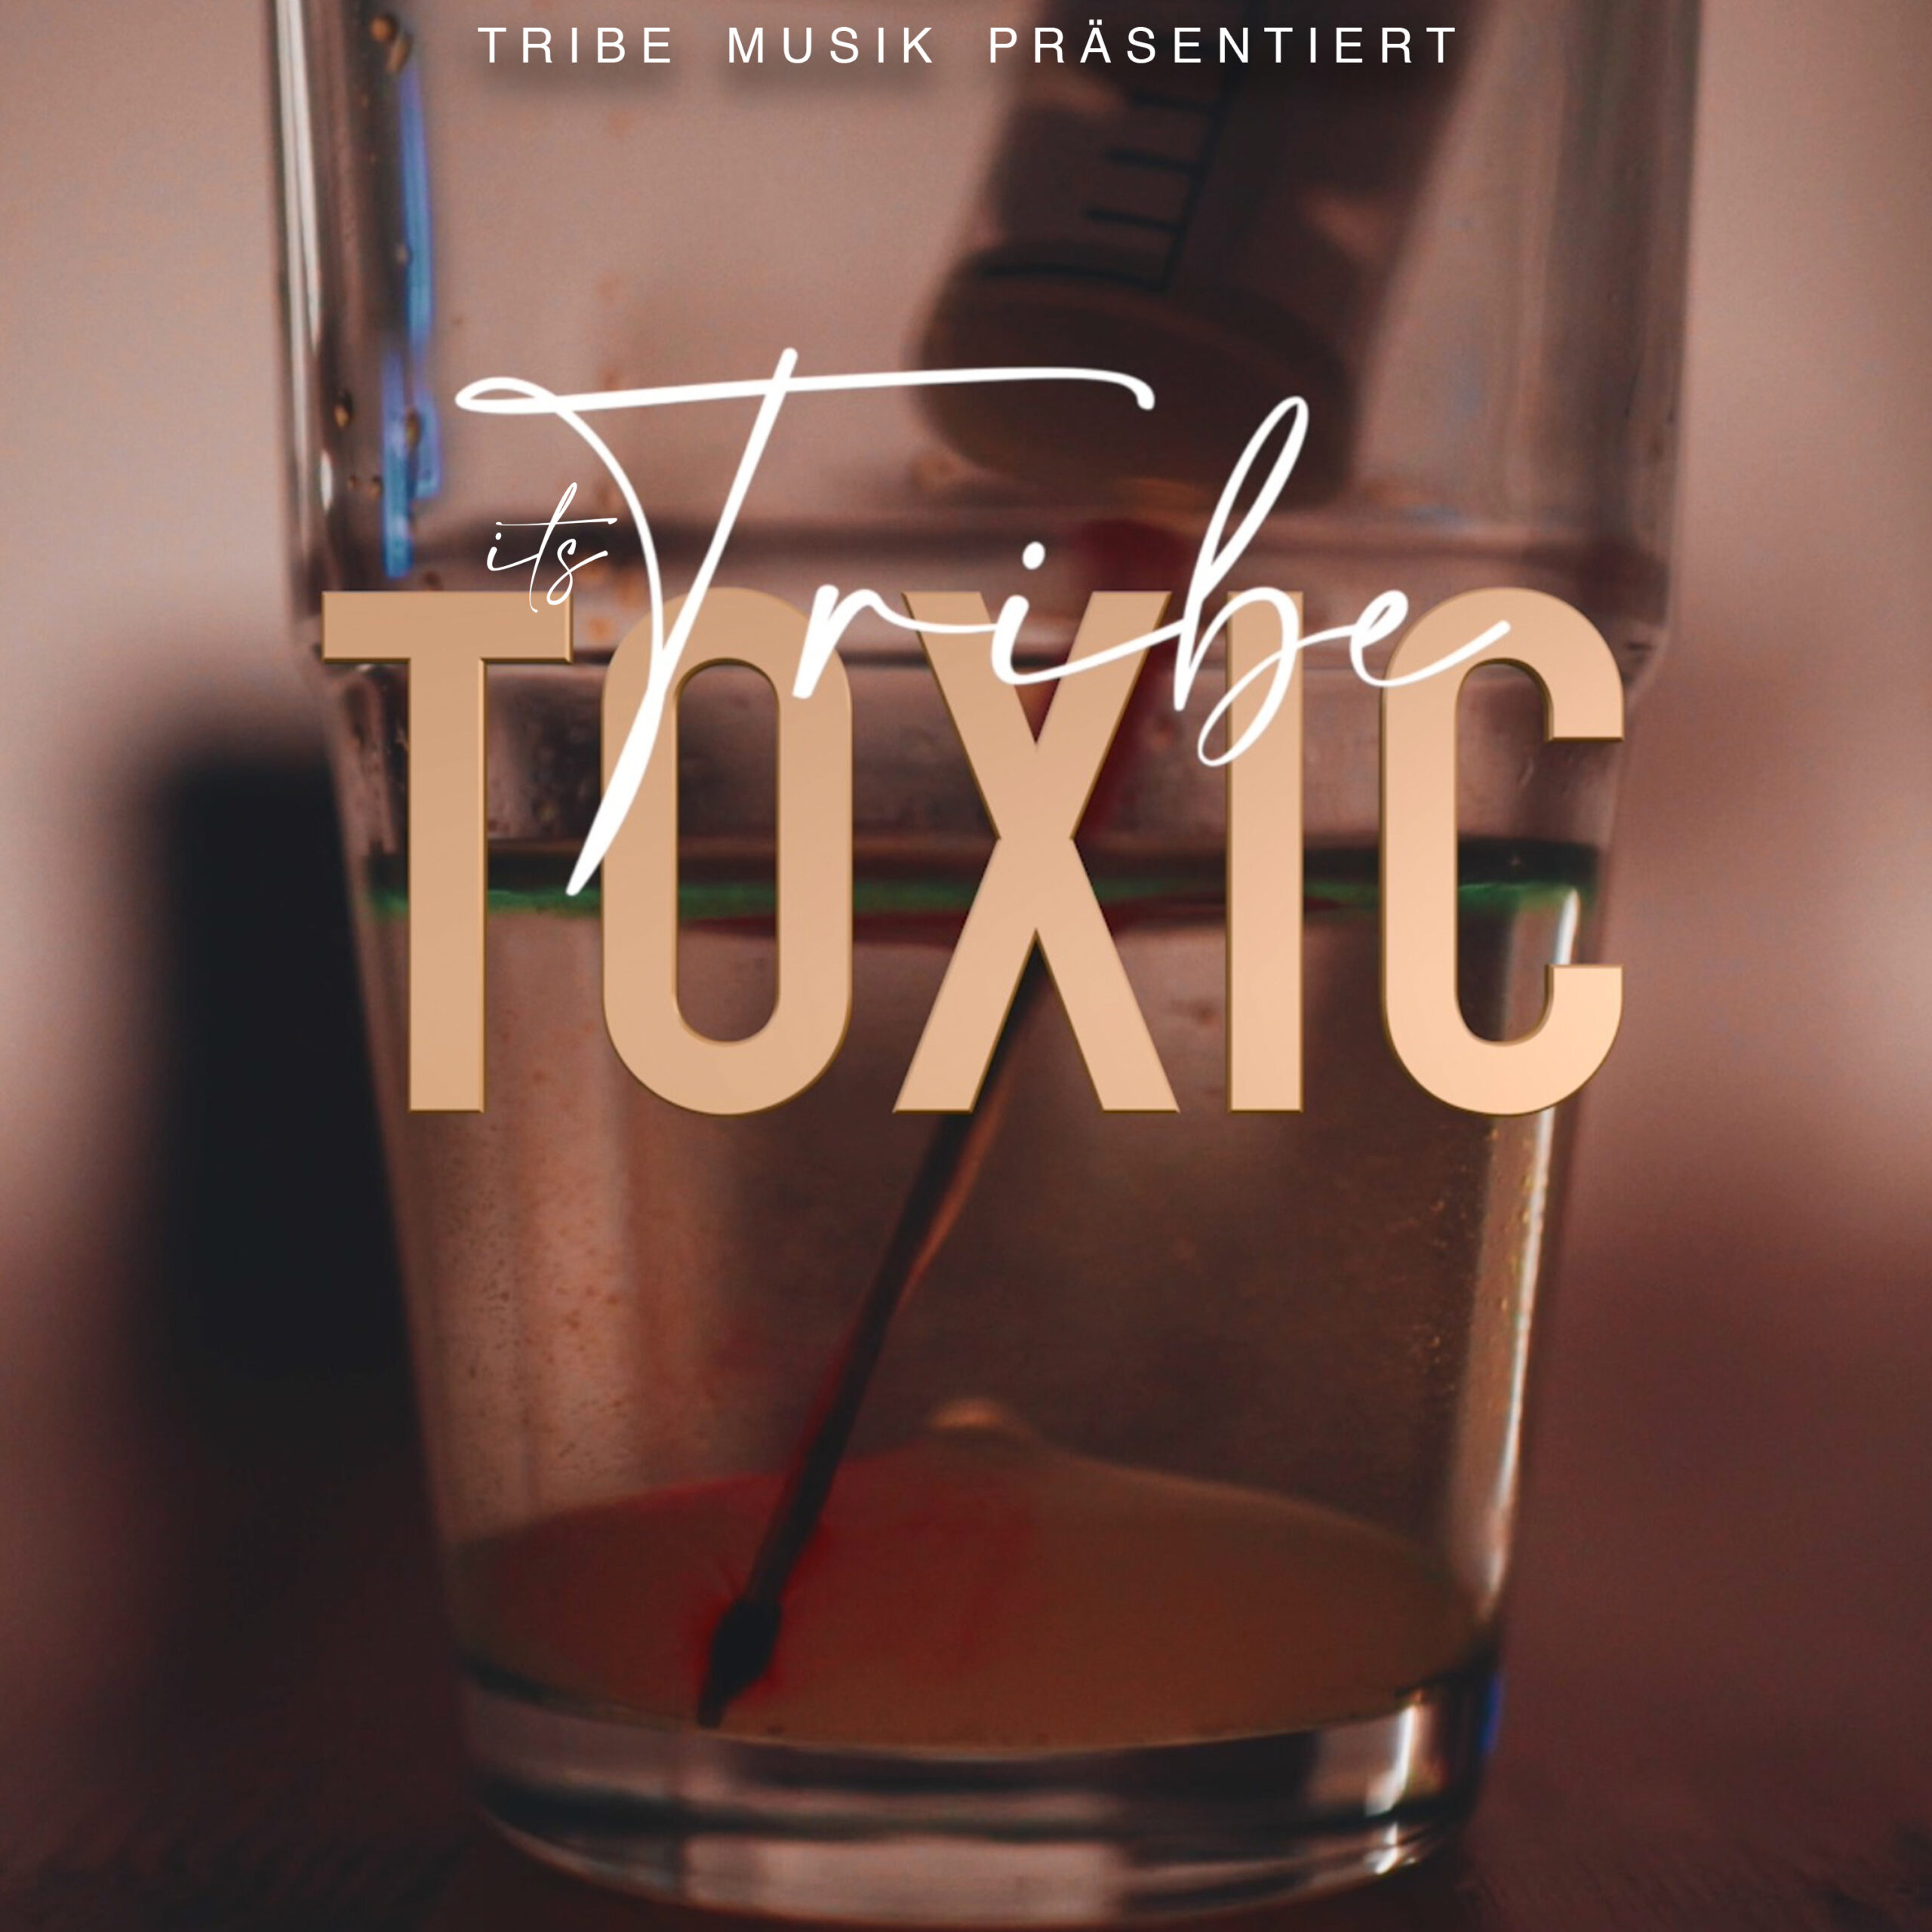 itstribe – Toxic